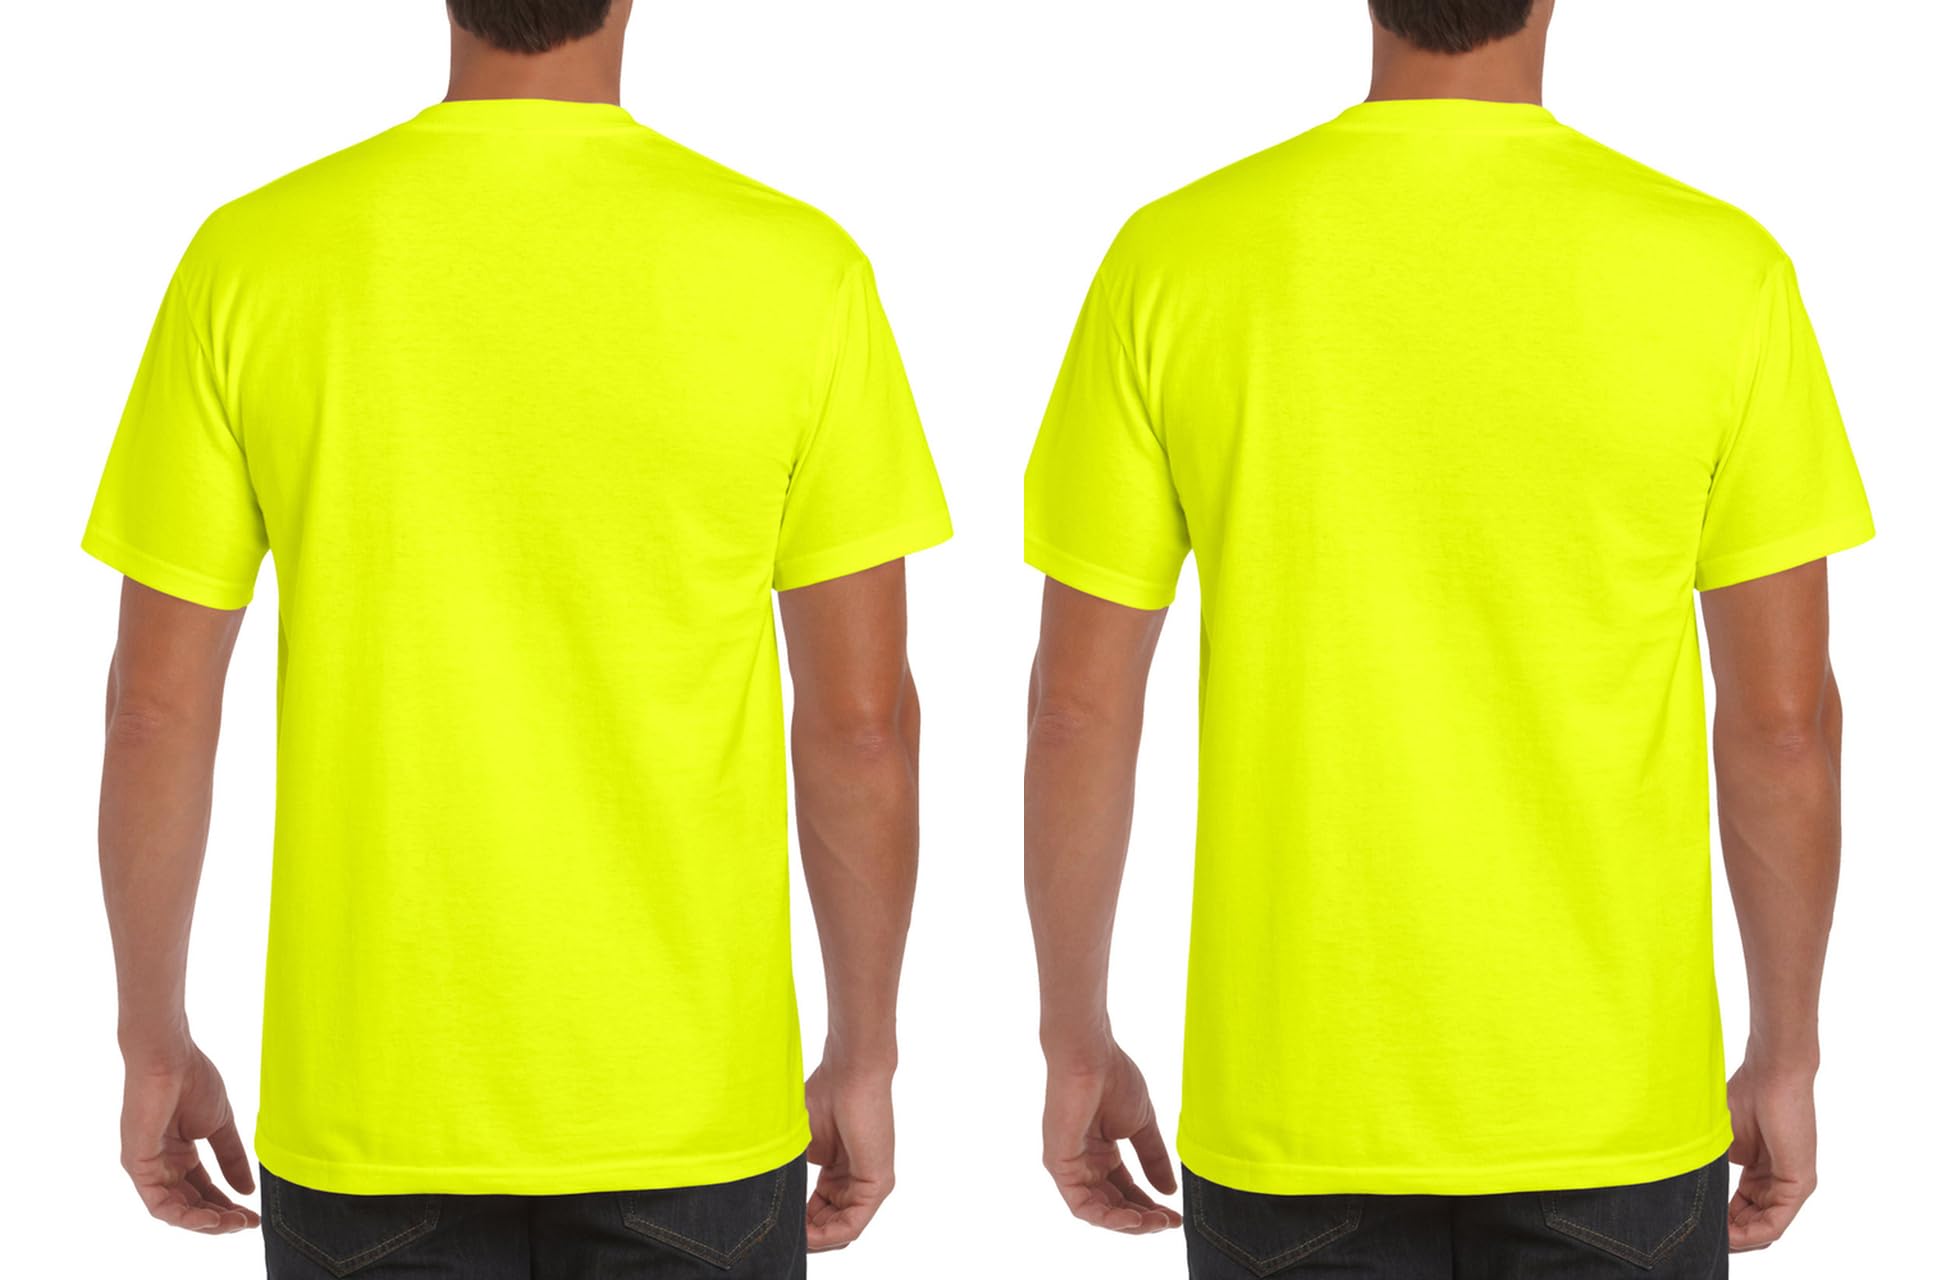 Gildan Adult DryBlend Workwear T-Shirts with Pocket, 2-Pack